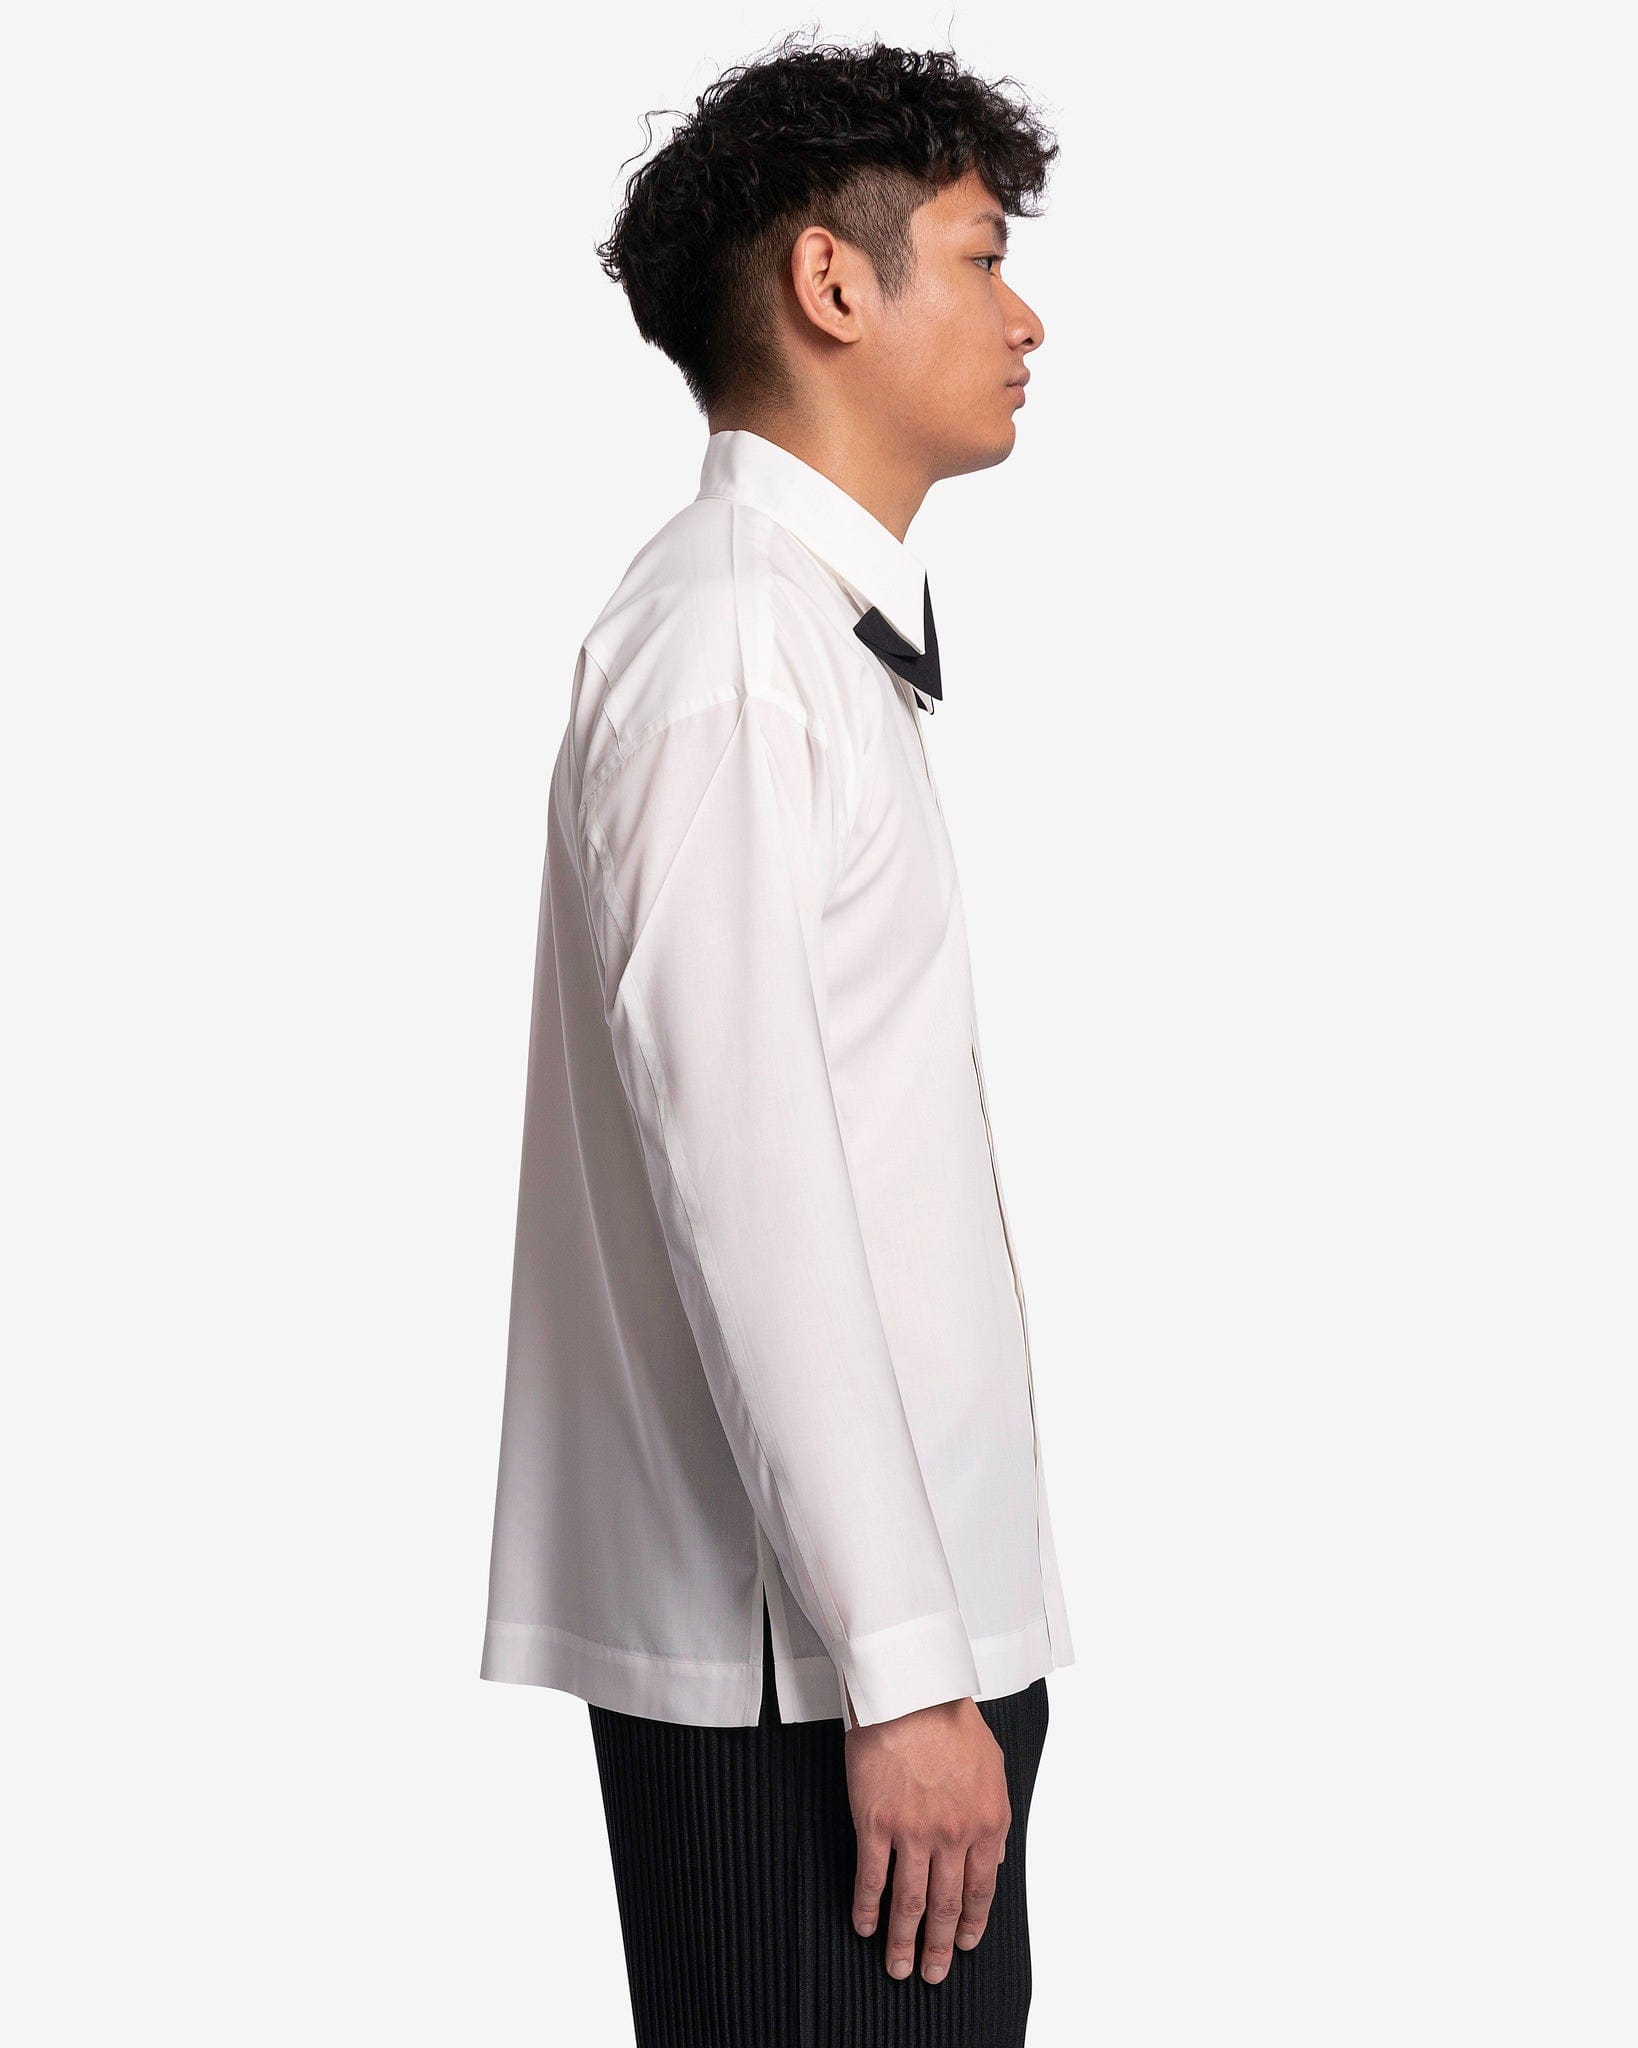 Bow-Tie Press Shirt in White/Black